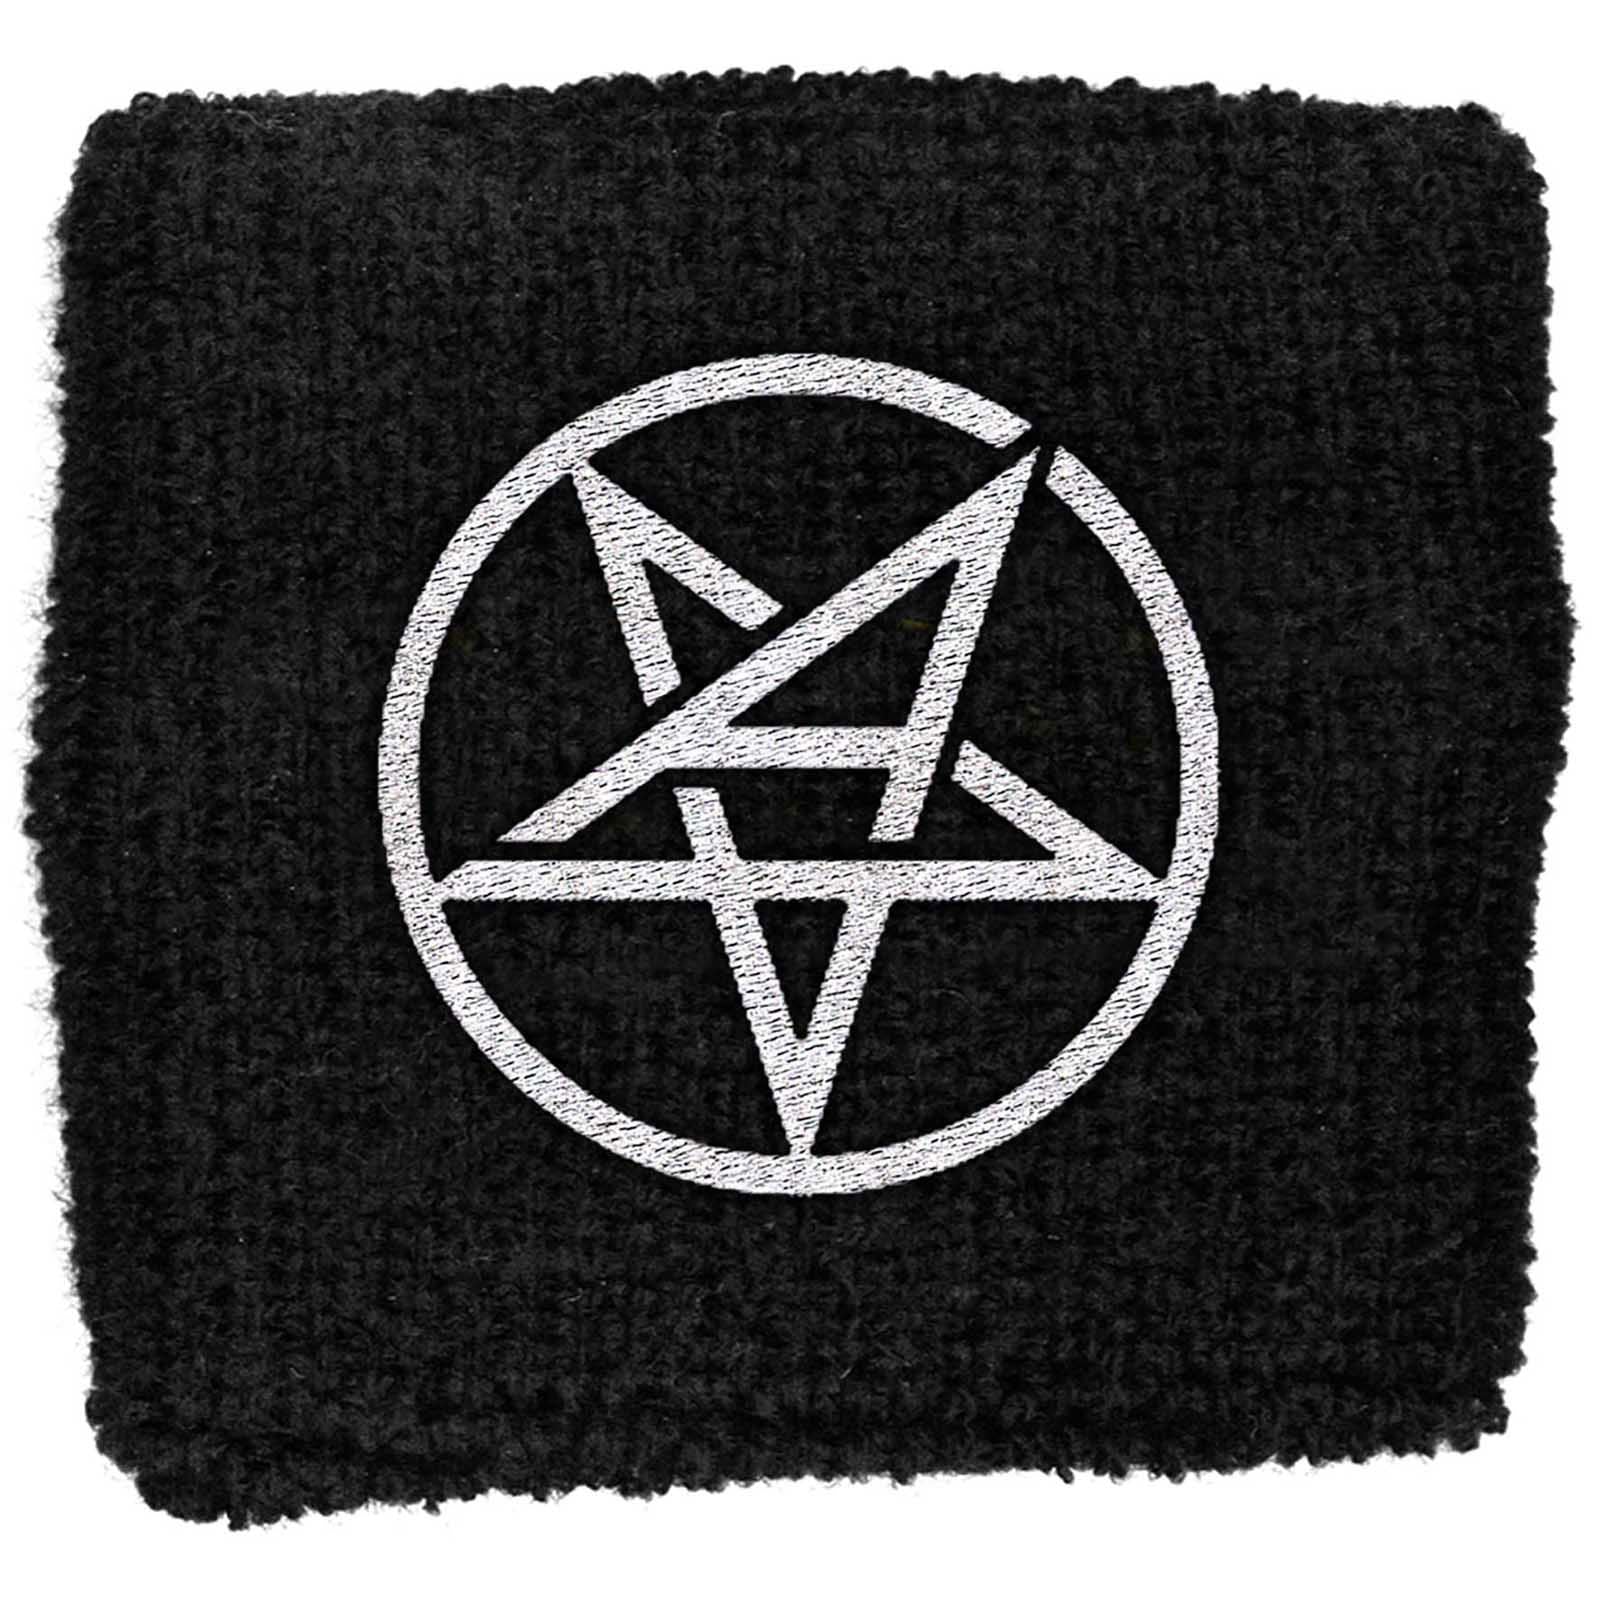 Anthrax Fabric Wristband: Pentathrax (Loose)